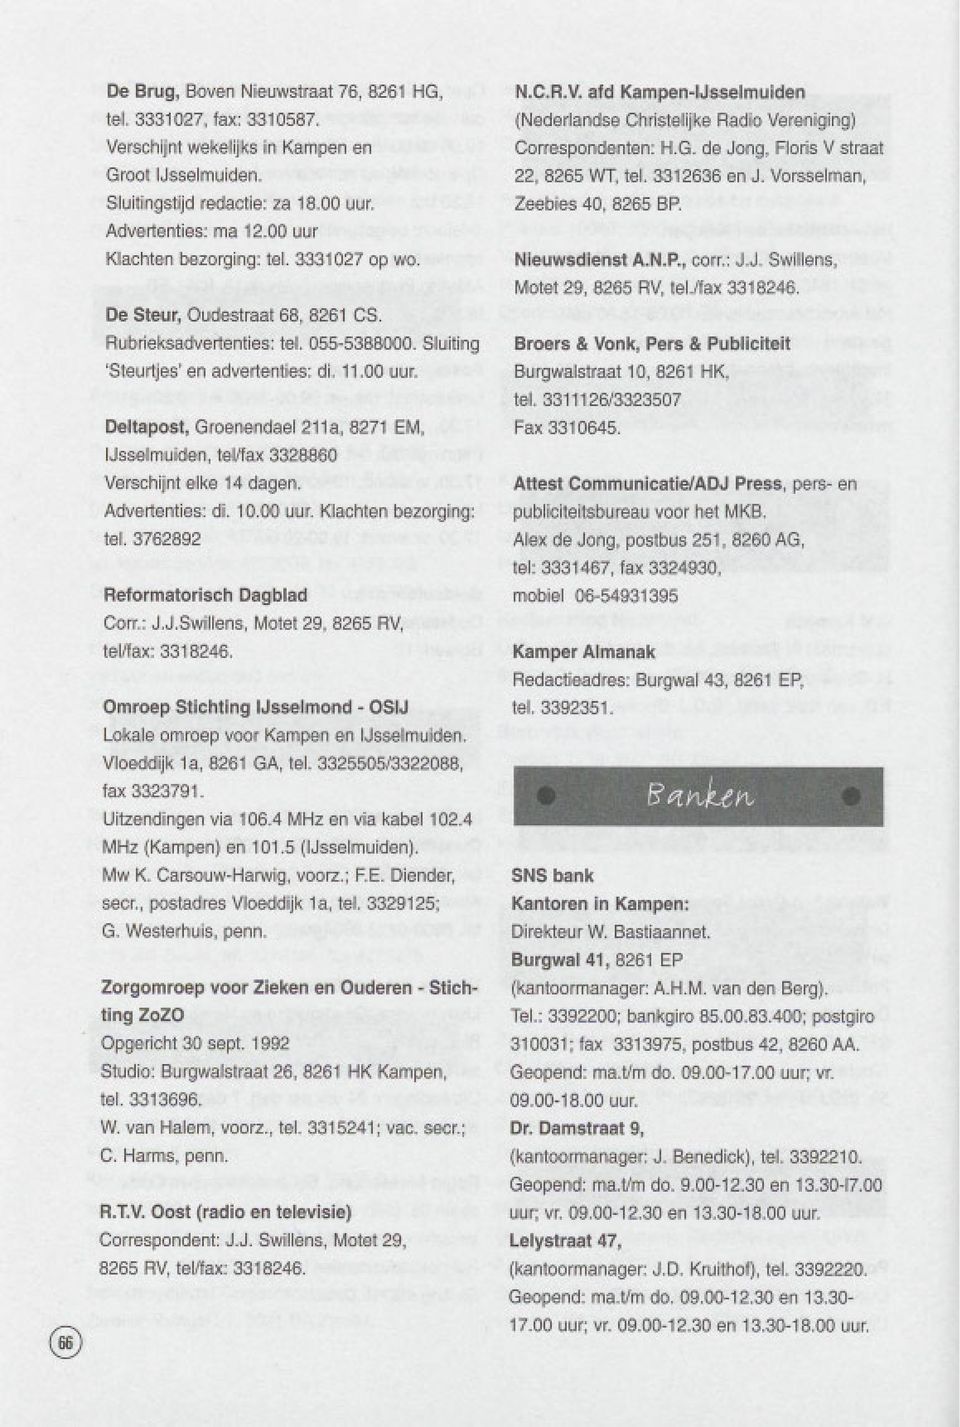 Advertenties: di. 10.00 uur. Klachten bezorging: tel. 3762892 Reformatorisch Dagblad Corr.: J.J.Swiliens, Motet 29,8265 RV, tel/fax: 3318246.